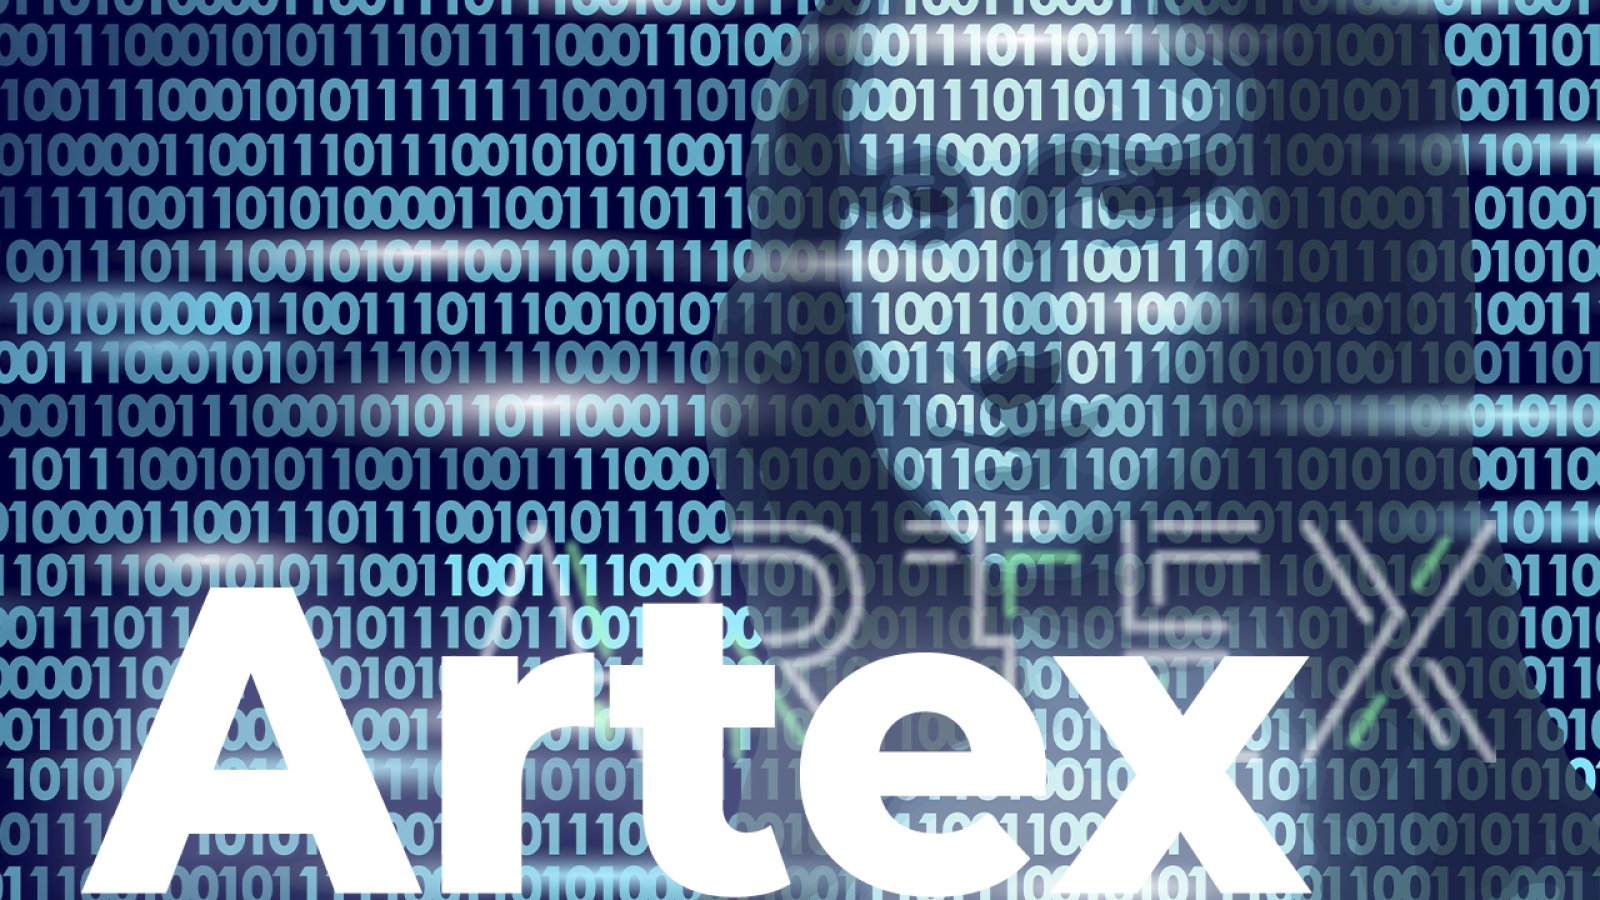 Artex - The Next Art Revolution in Crypto